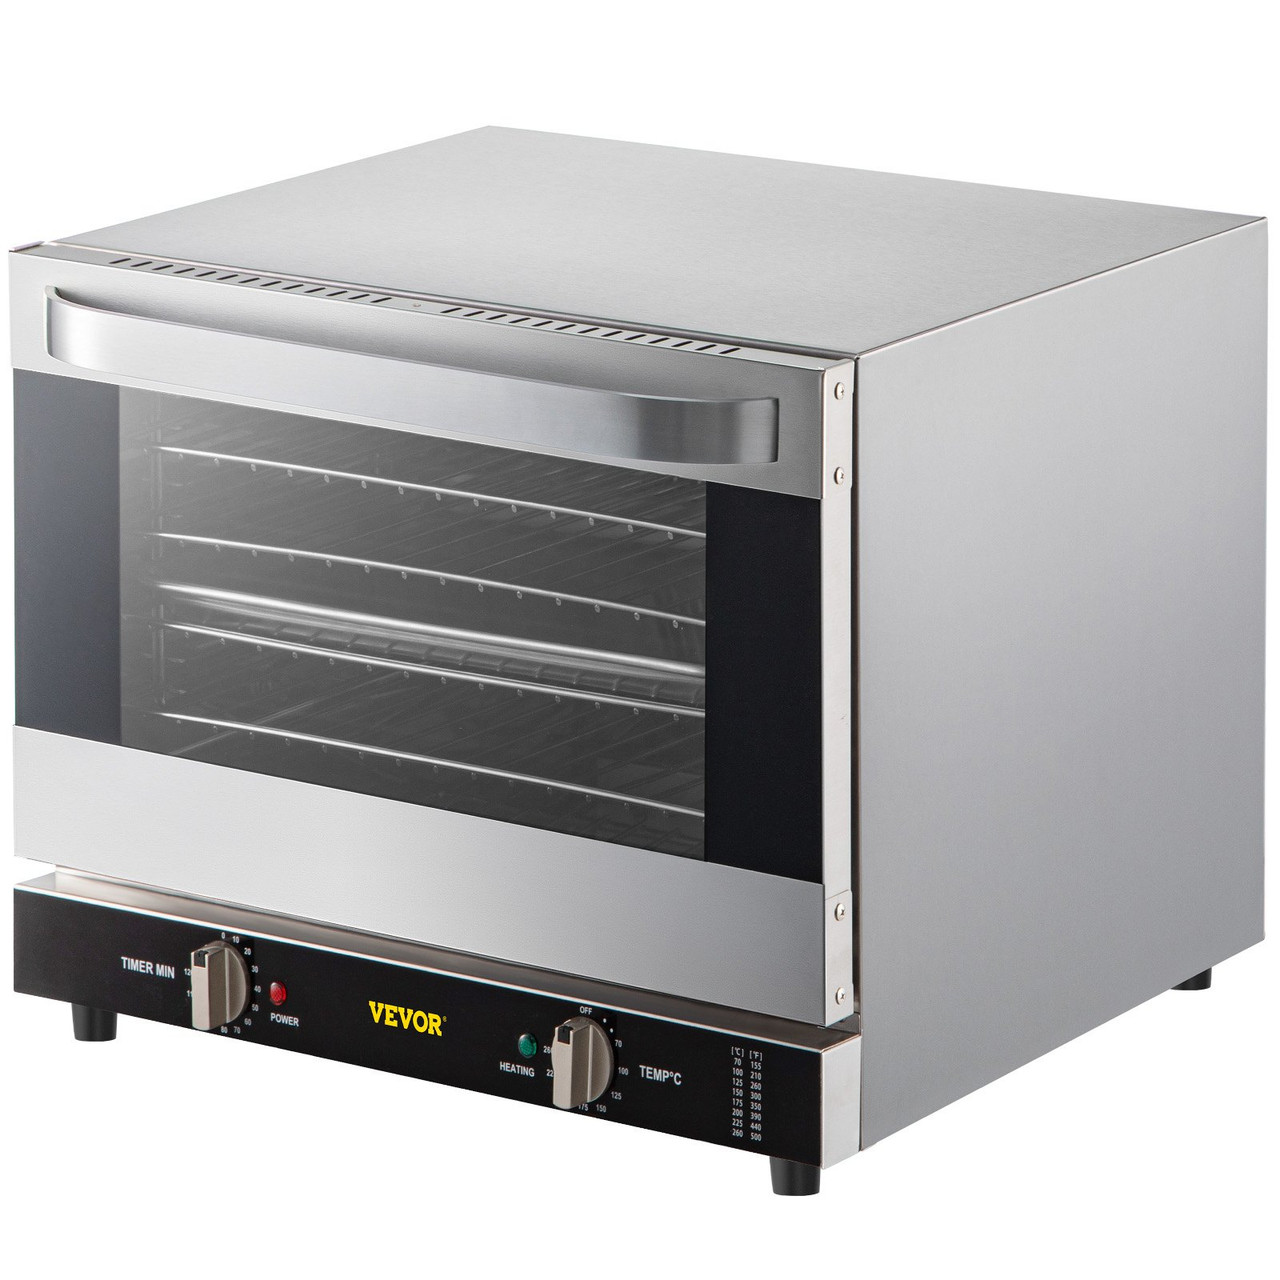 Countertop Convection Toaster Oven